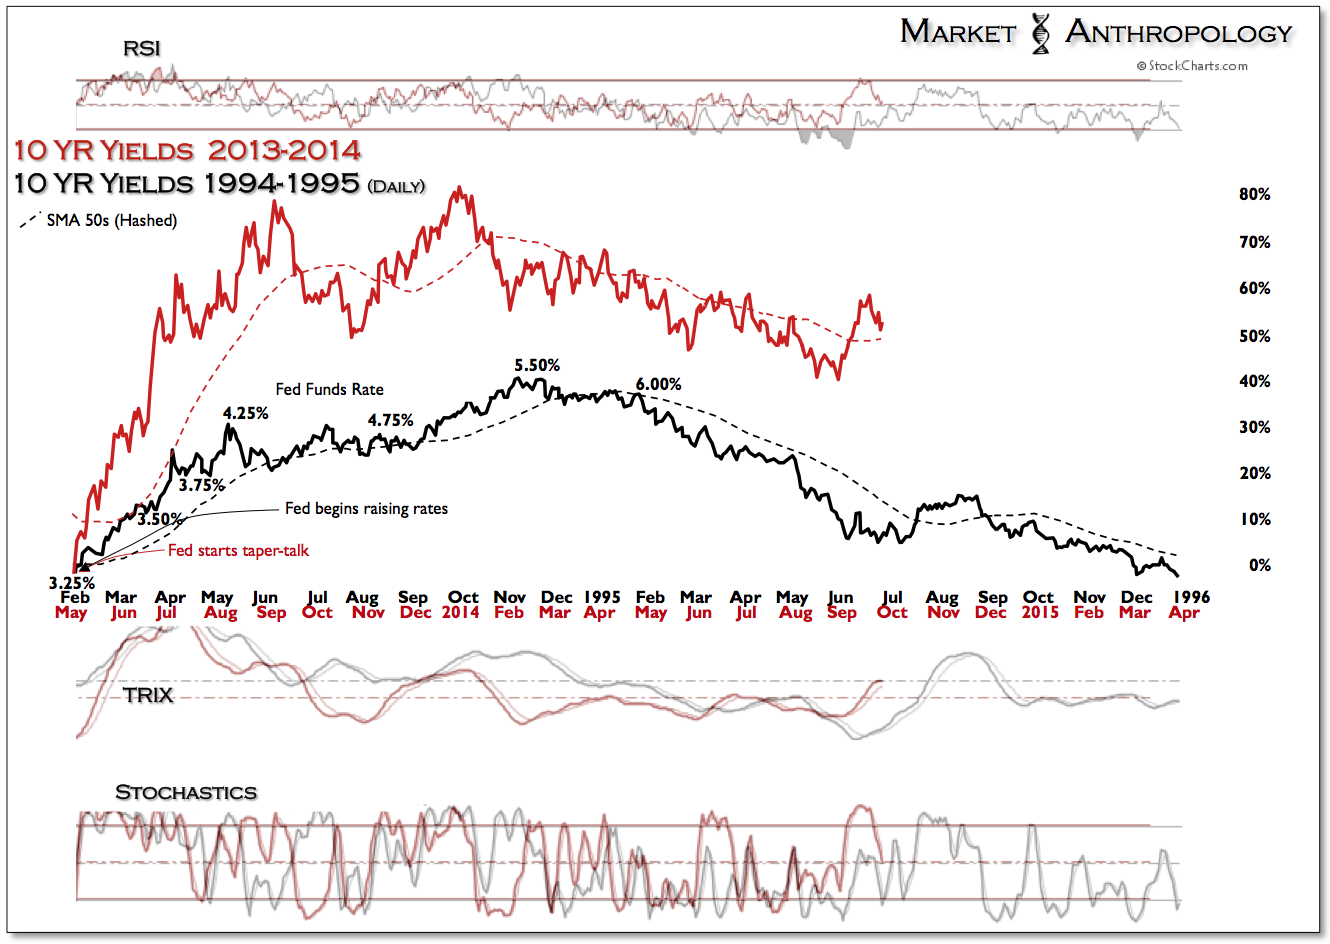 10 Yr Yields 2013 - 2014 vs 10 Yr Yields 1994 - 1995 Daily Chart